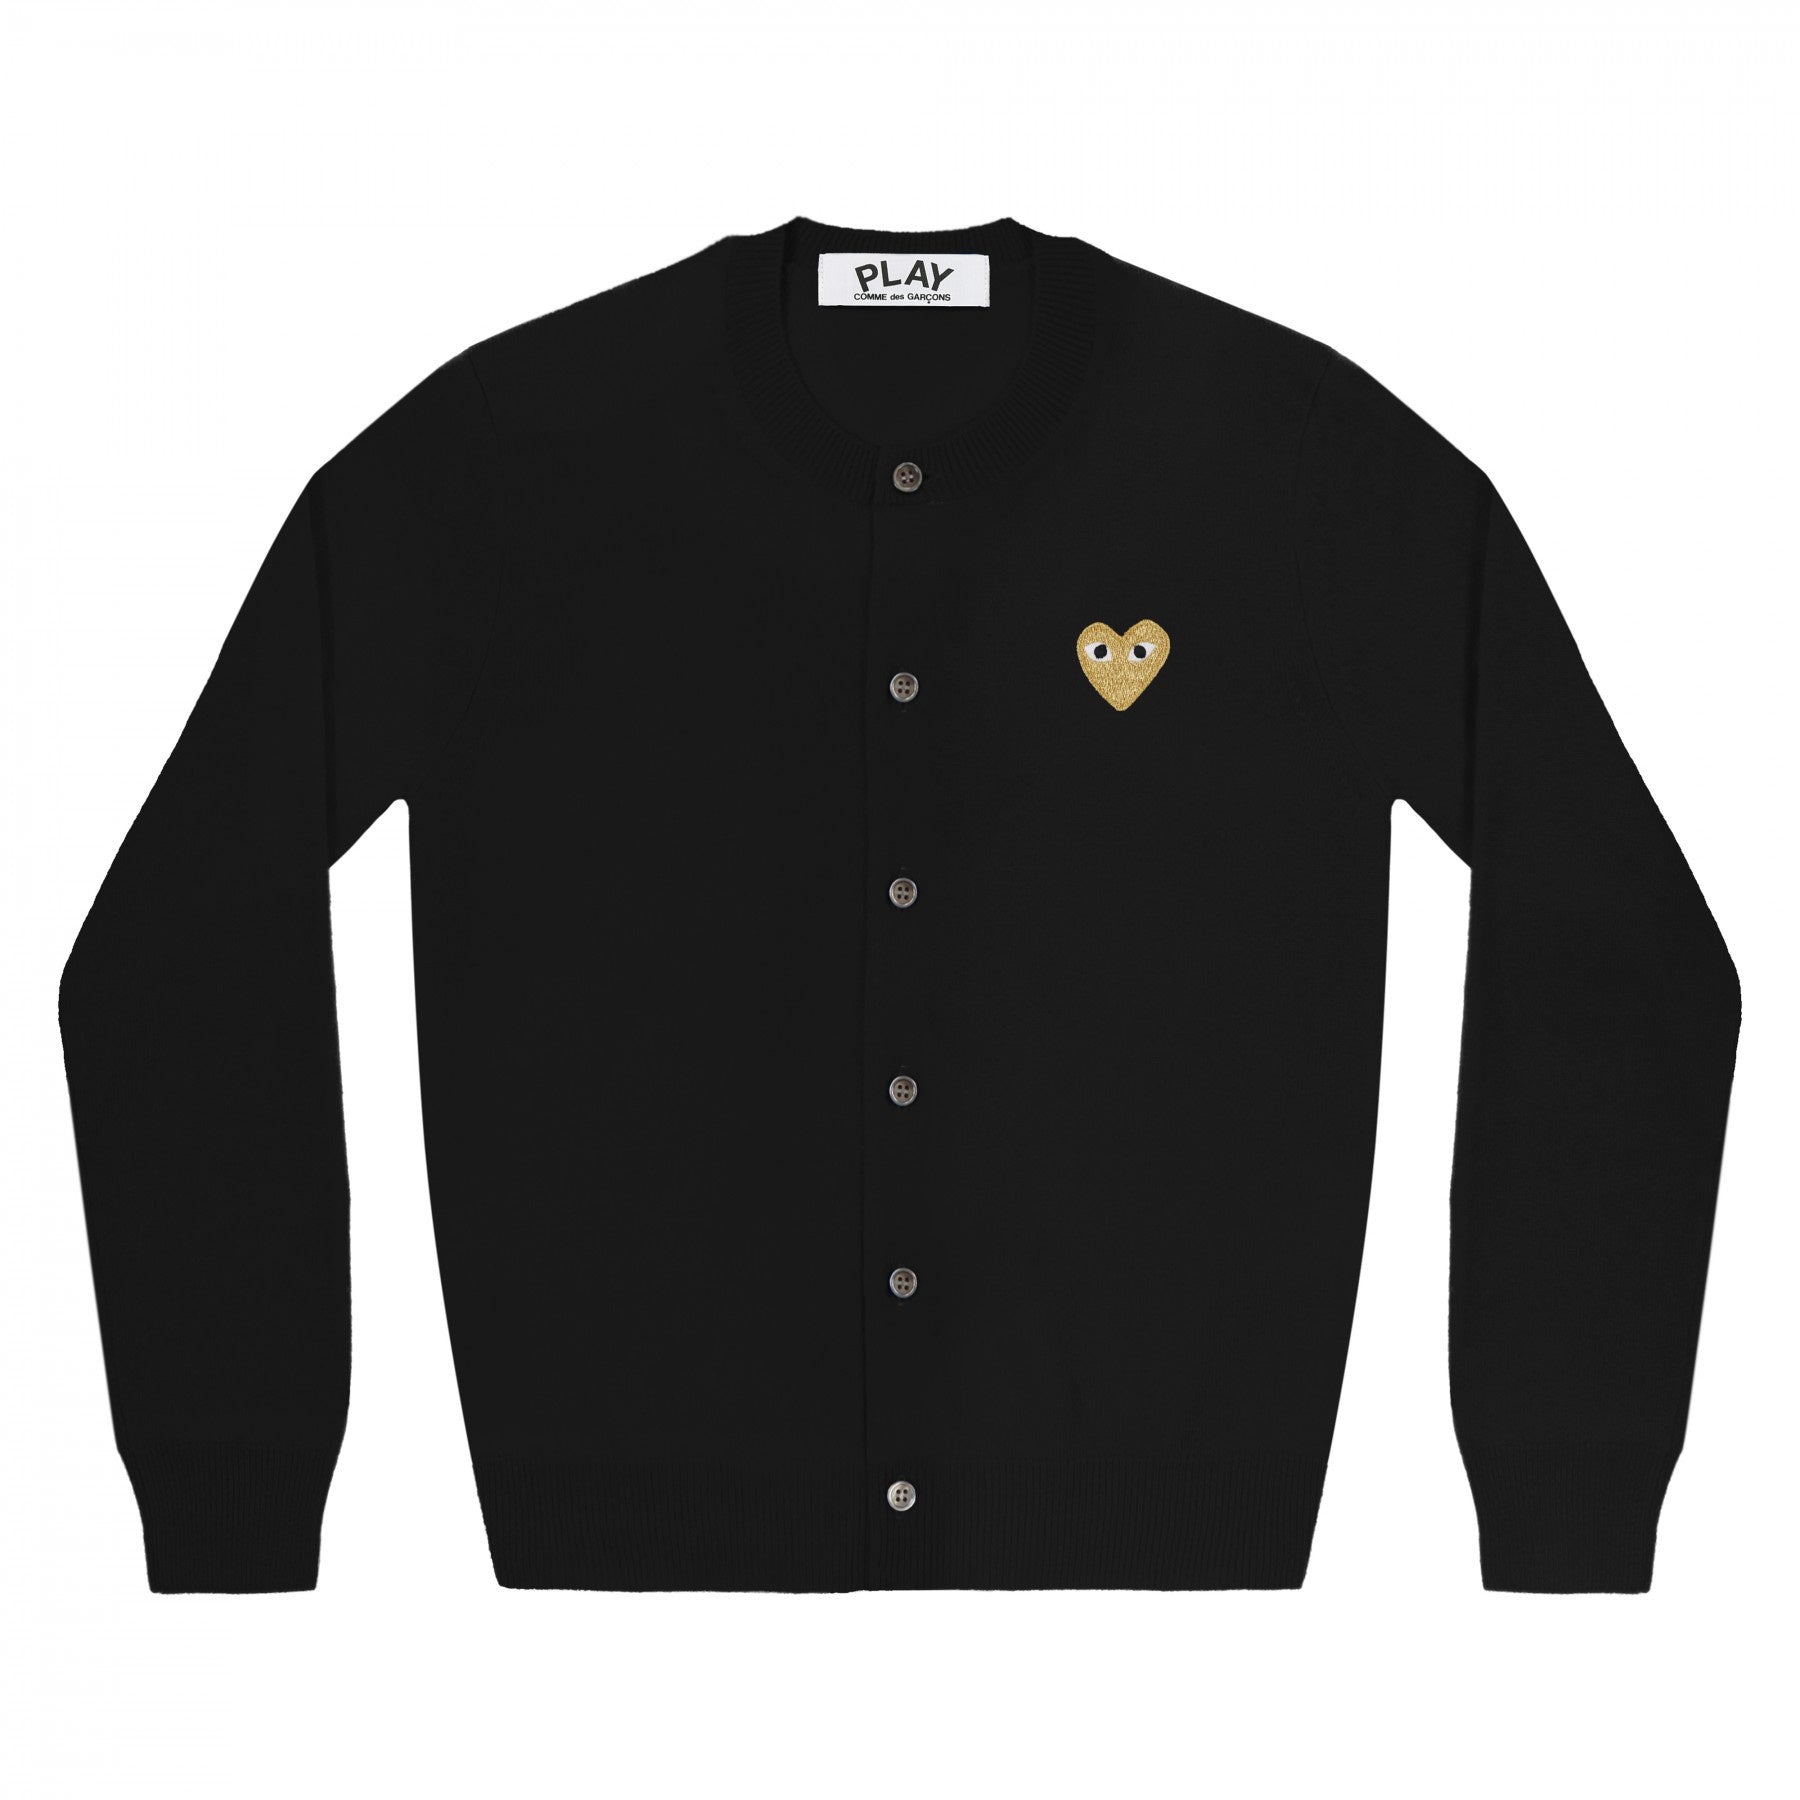 PLAY Women's Cardigan Gold Emblem (Black)